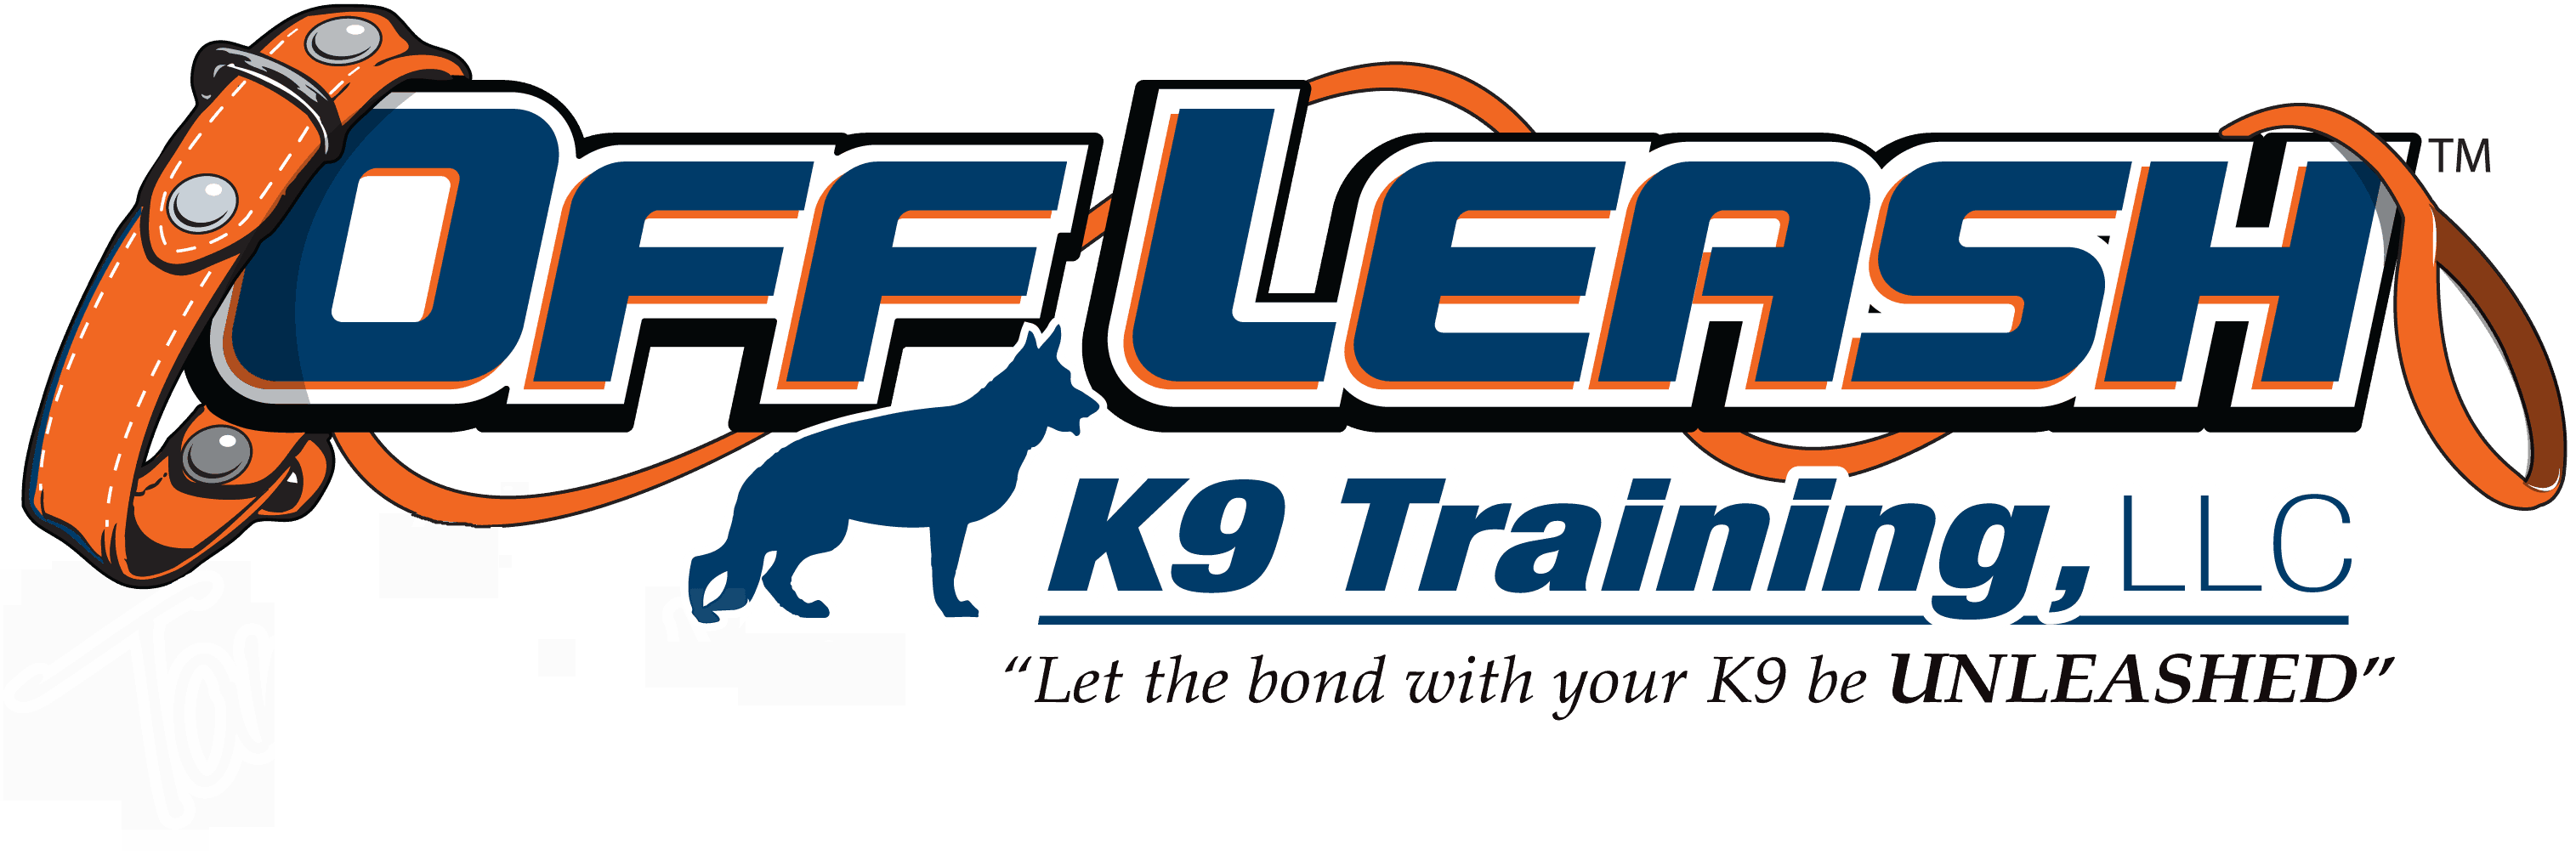 olk9-general-logo.png